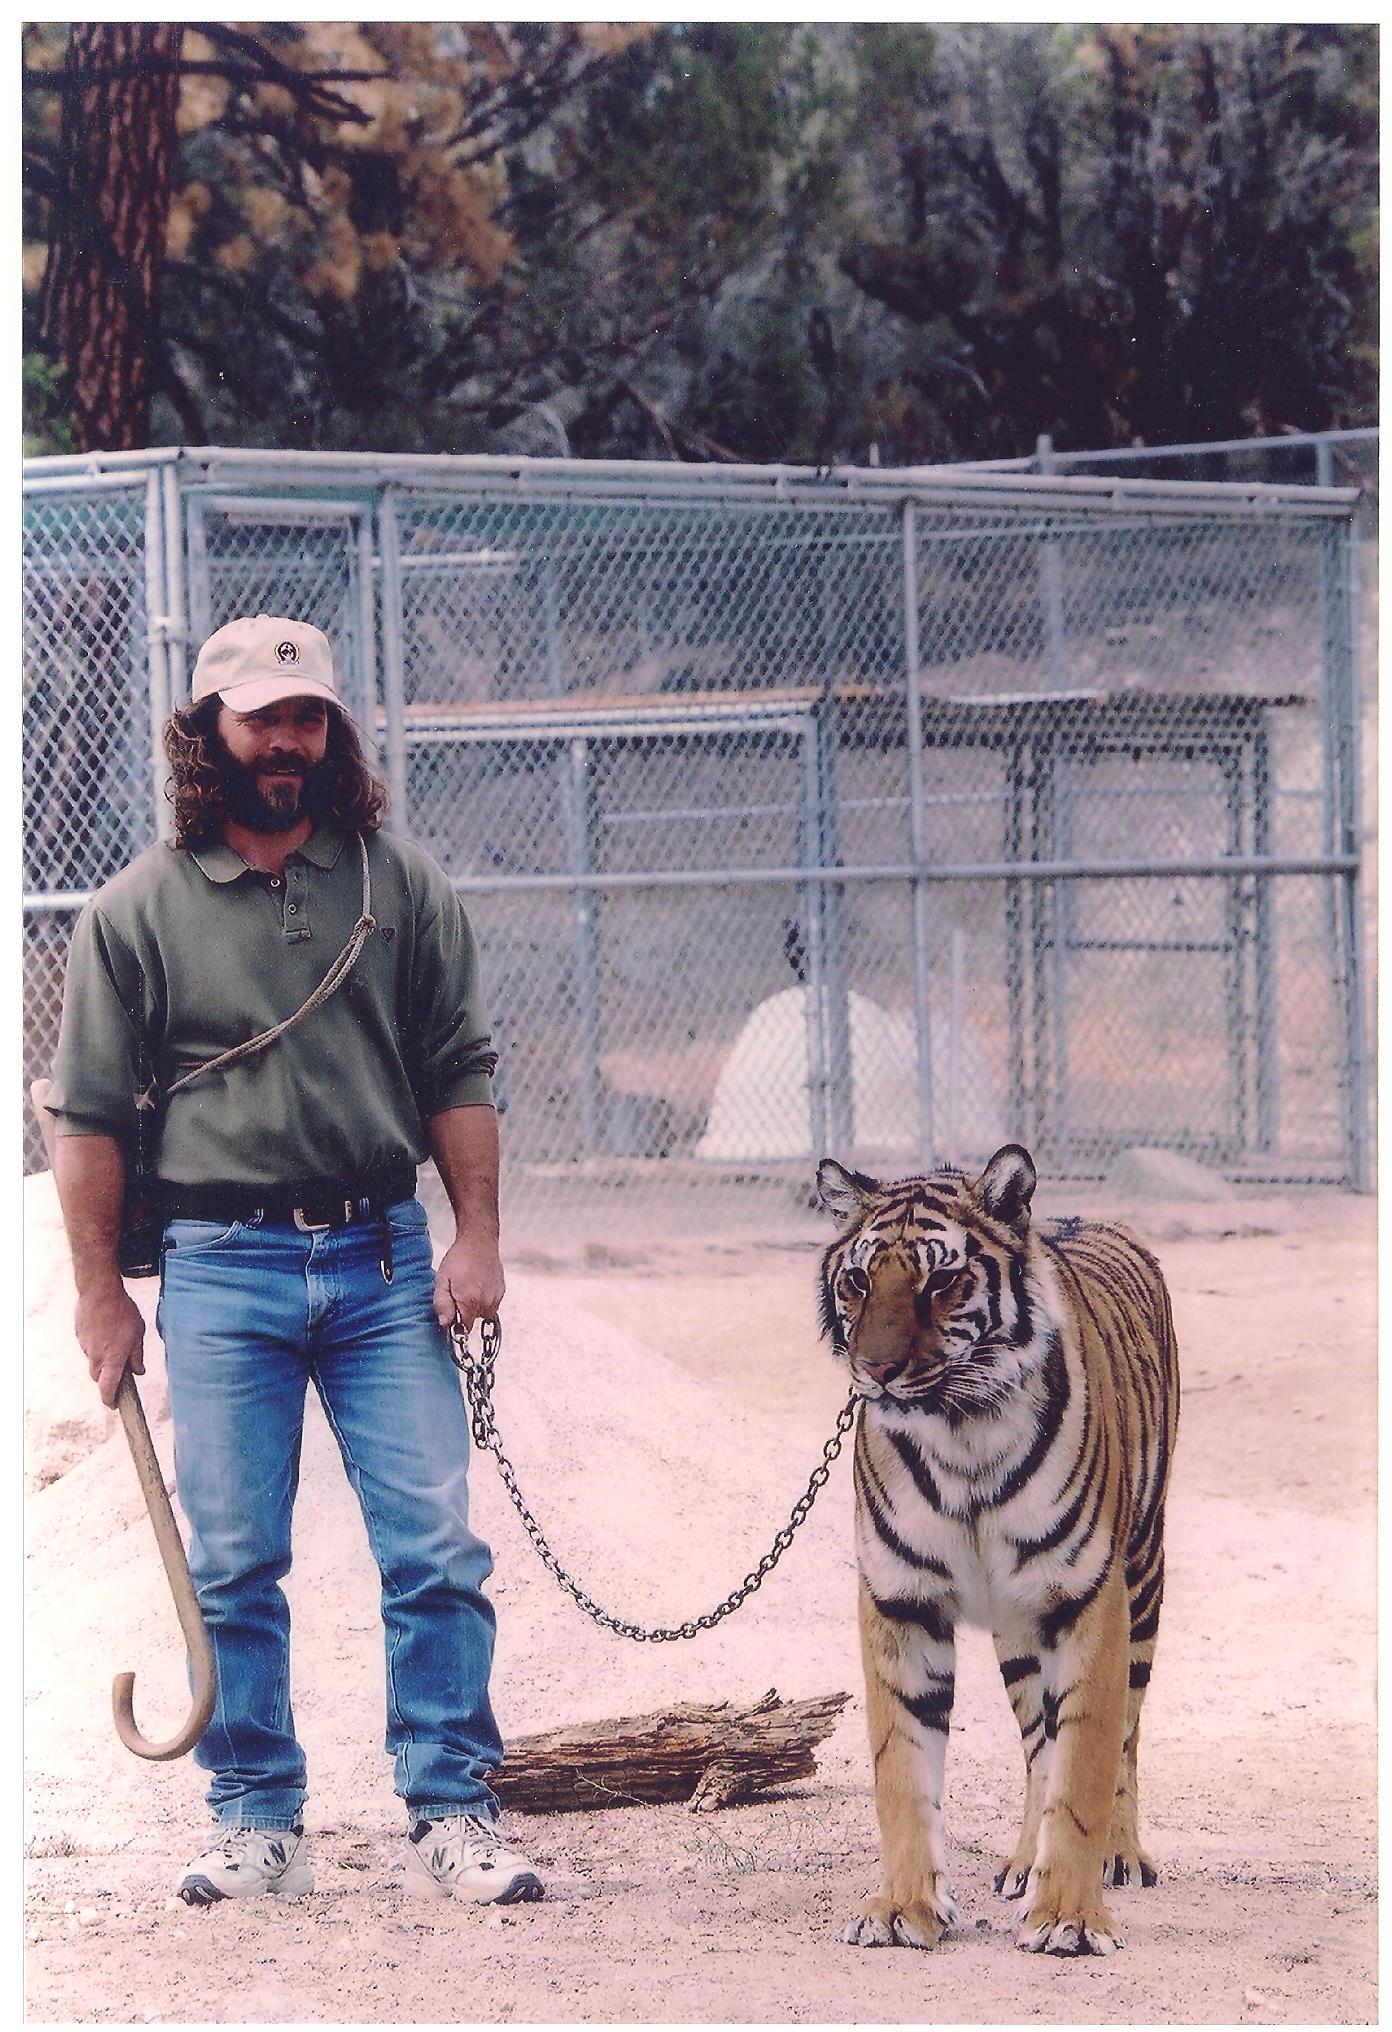 Training with Tara 2002! Tiger Owner Randy Miller did Tiger Stunts on Gladiator with Tara!